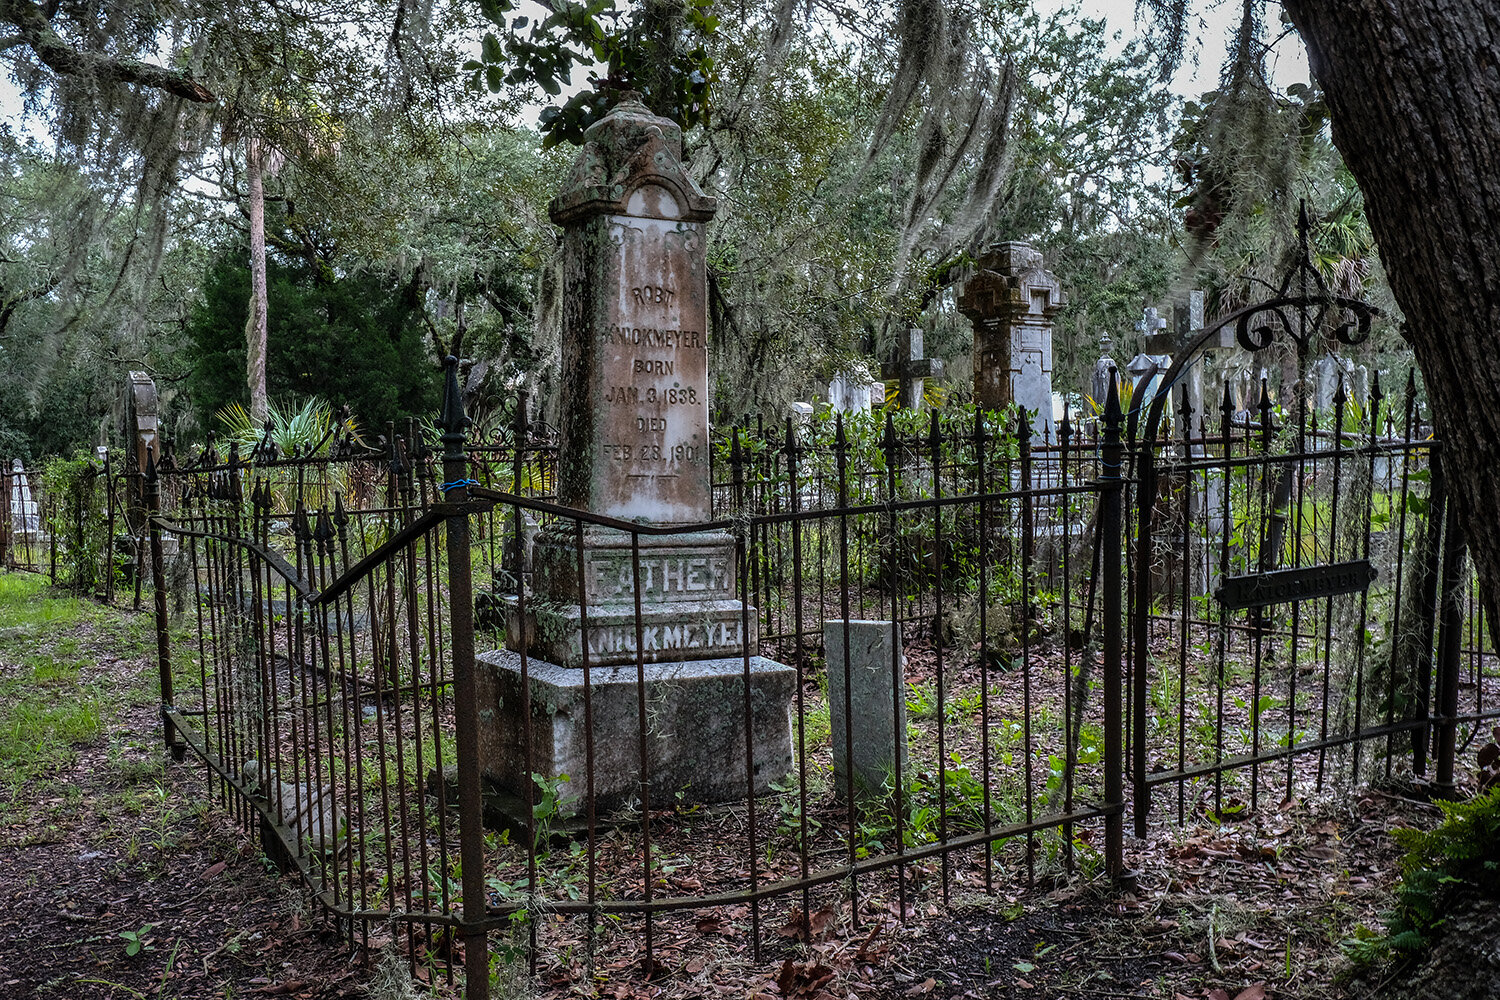  Chestnut St. Cemetery, Apalachicola, FL 